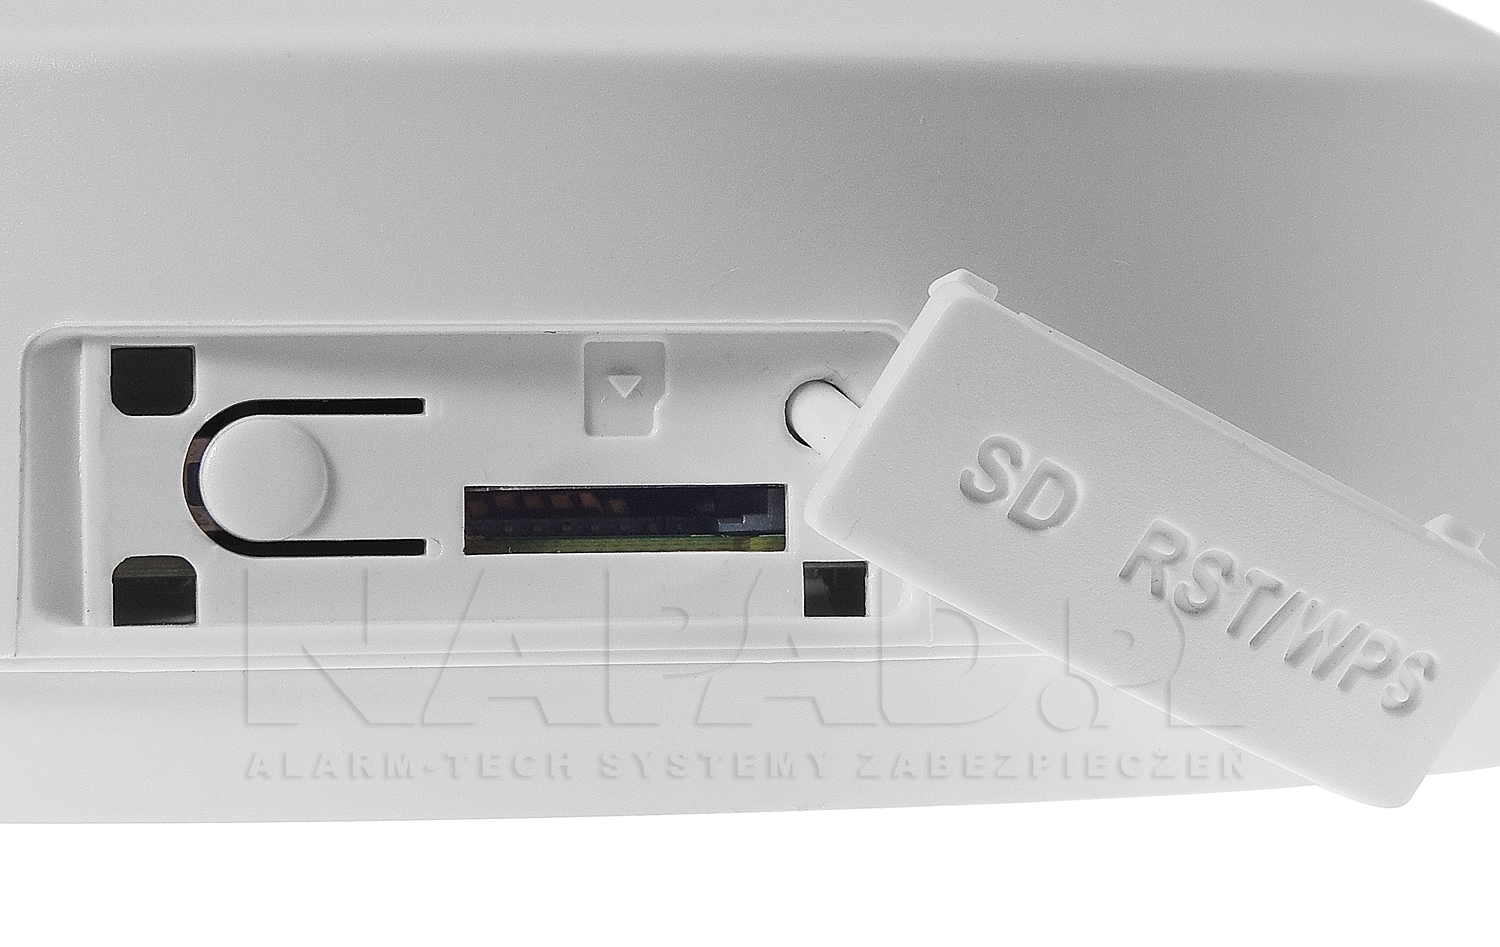 DS-2CD2F42FWD-I - Wbudowany slot na karty microSD.